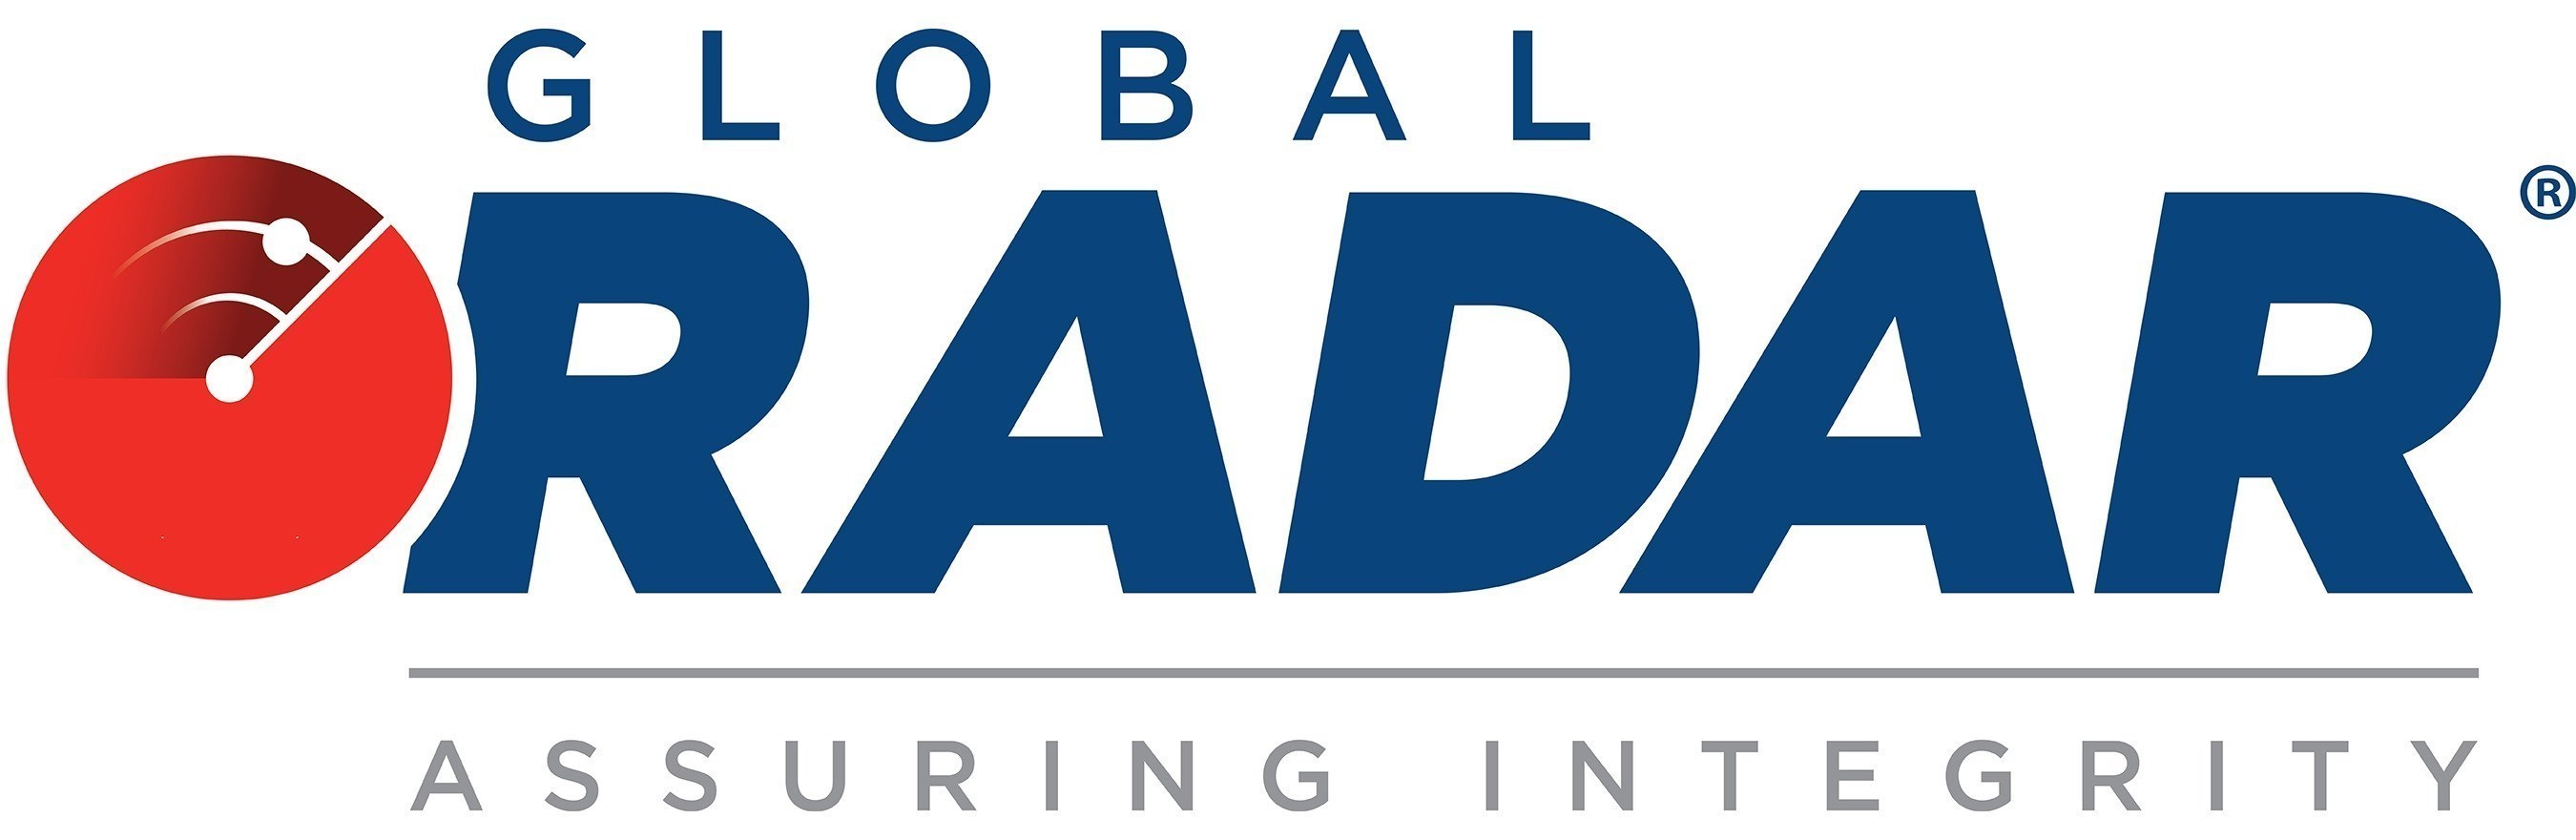 Global RADAR(R) Named Top 10 Risk & Compliance Solutions Provider